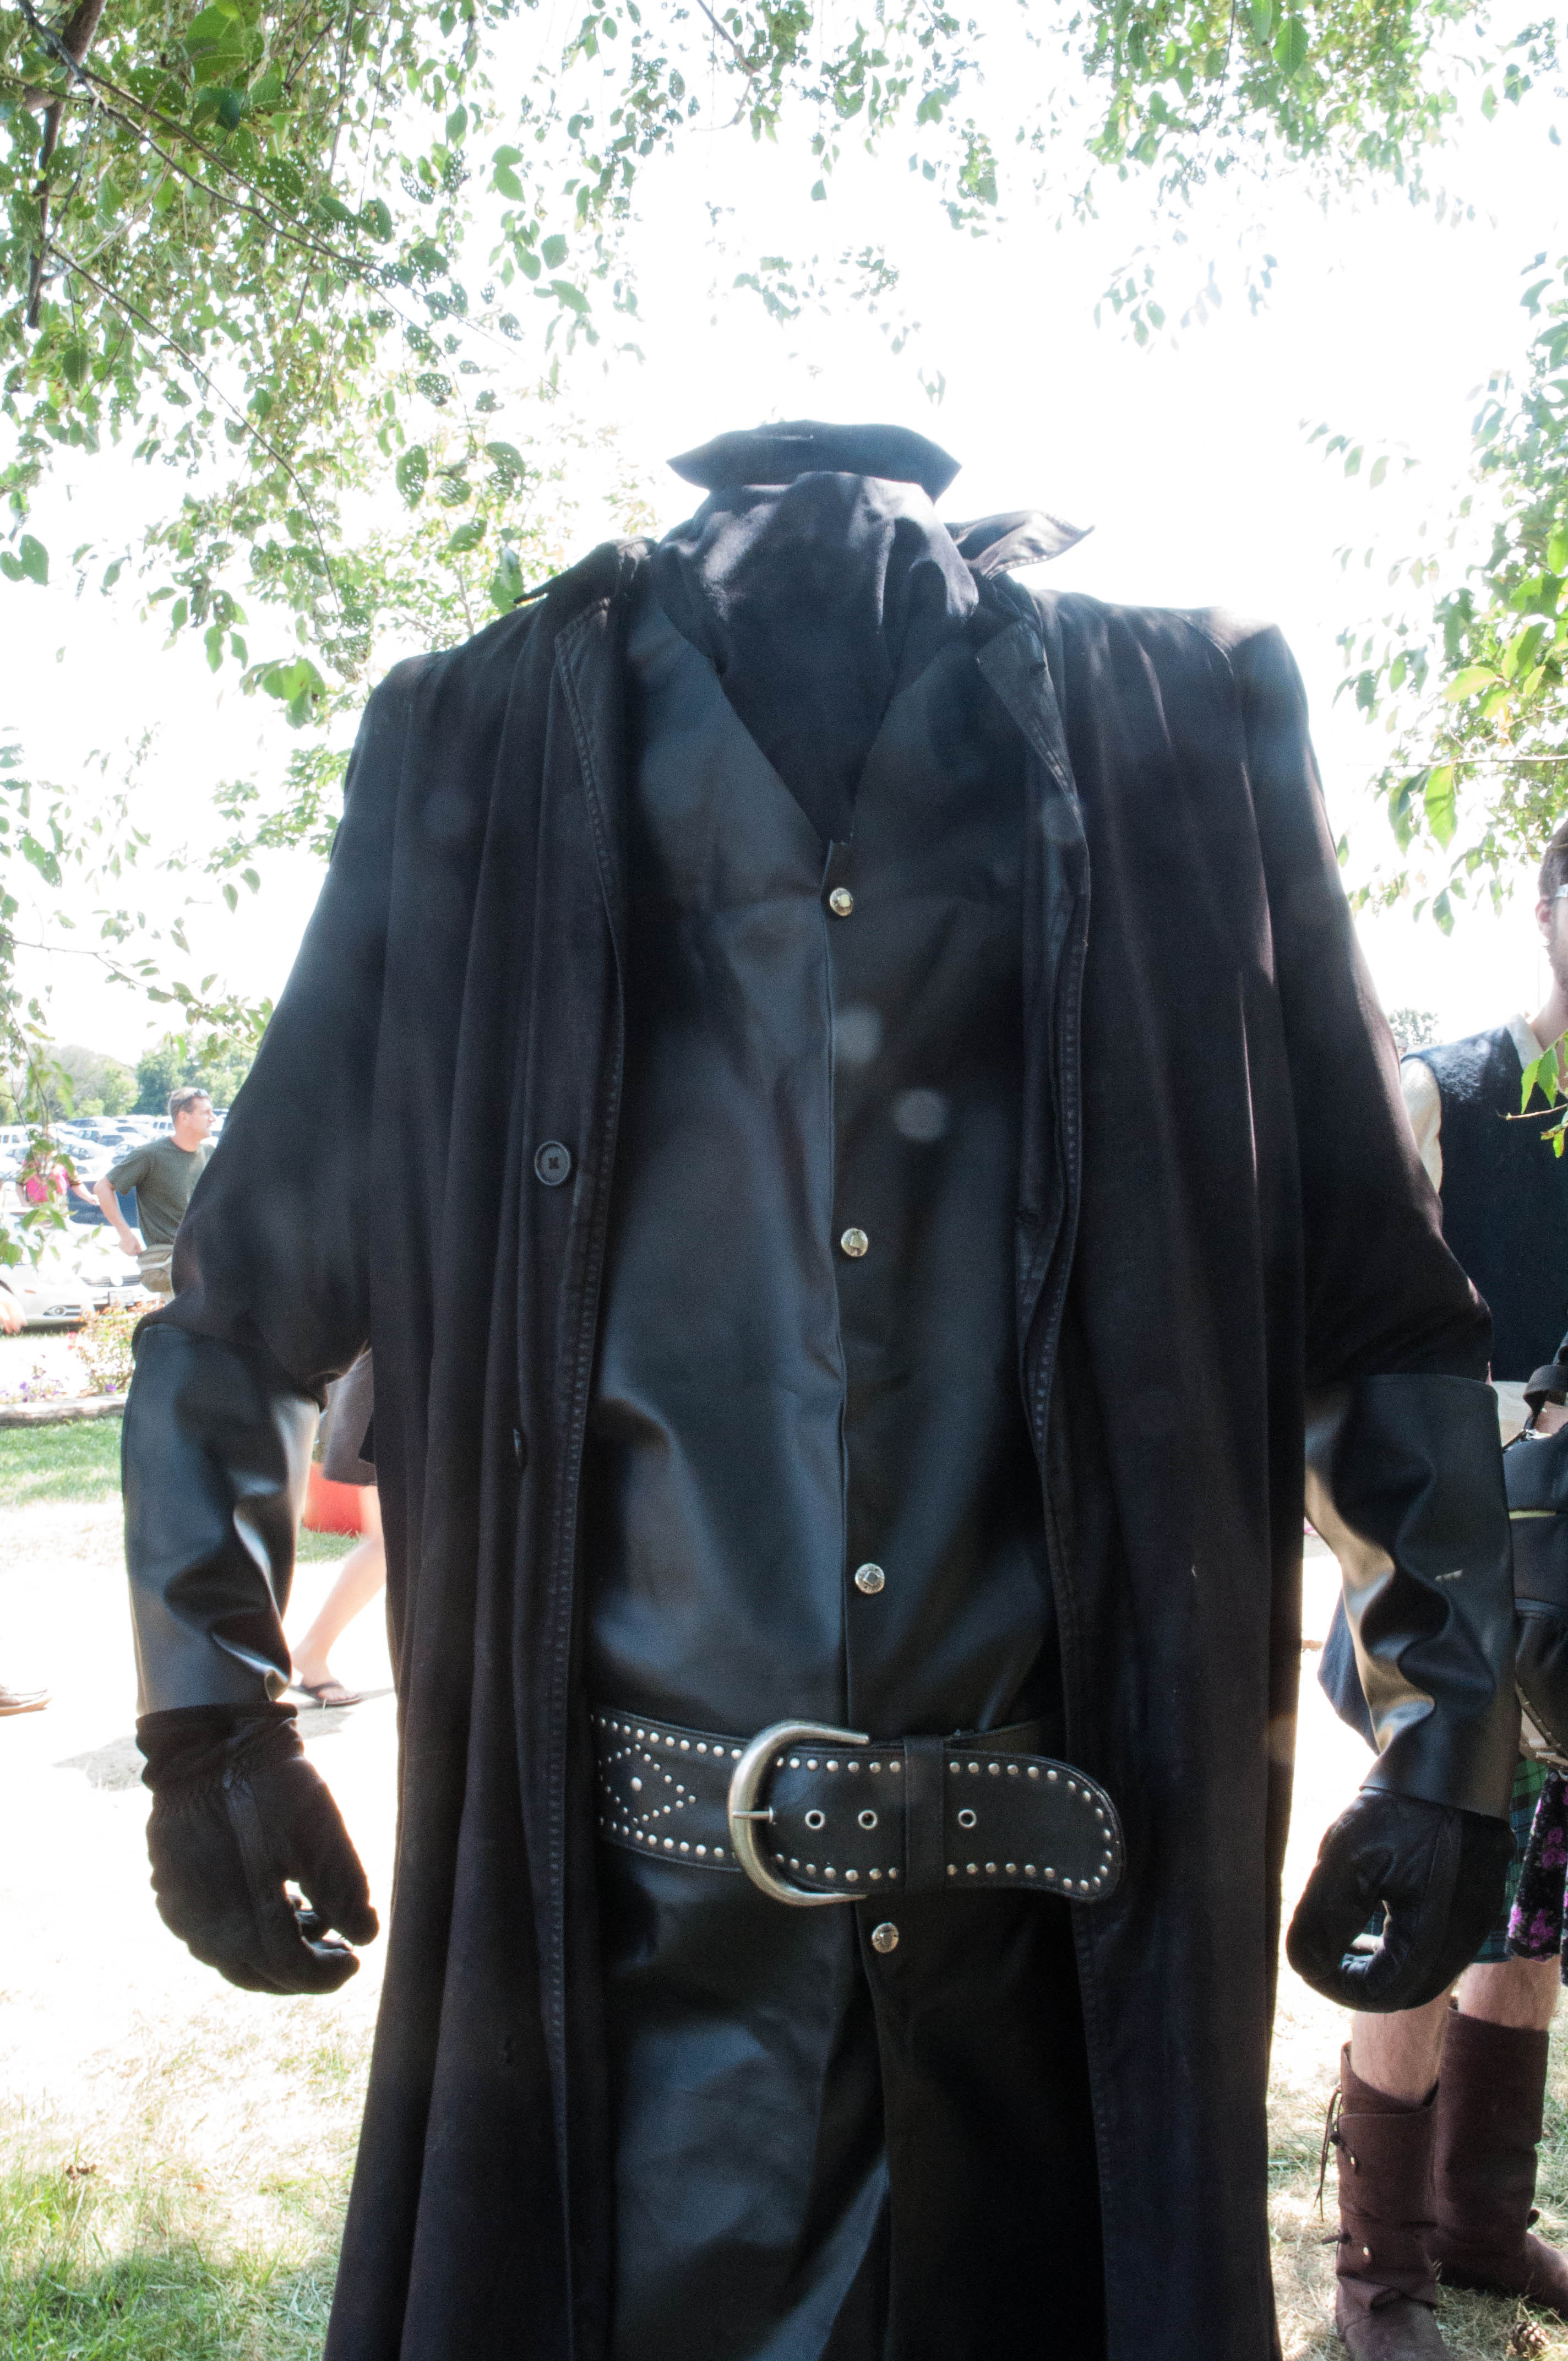 DIY Headless Horseman Costume
 Weekend Shenanigans Renaissance Faire